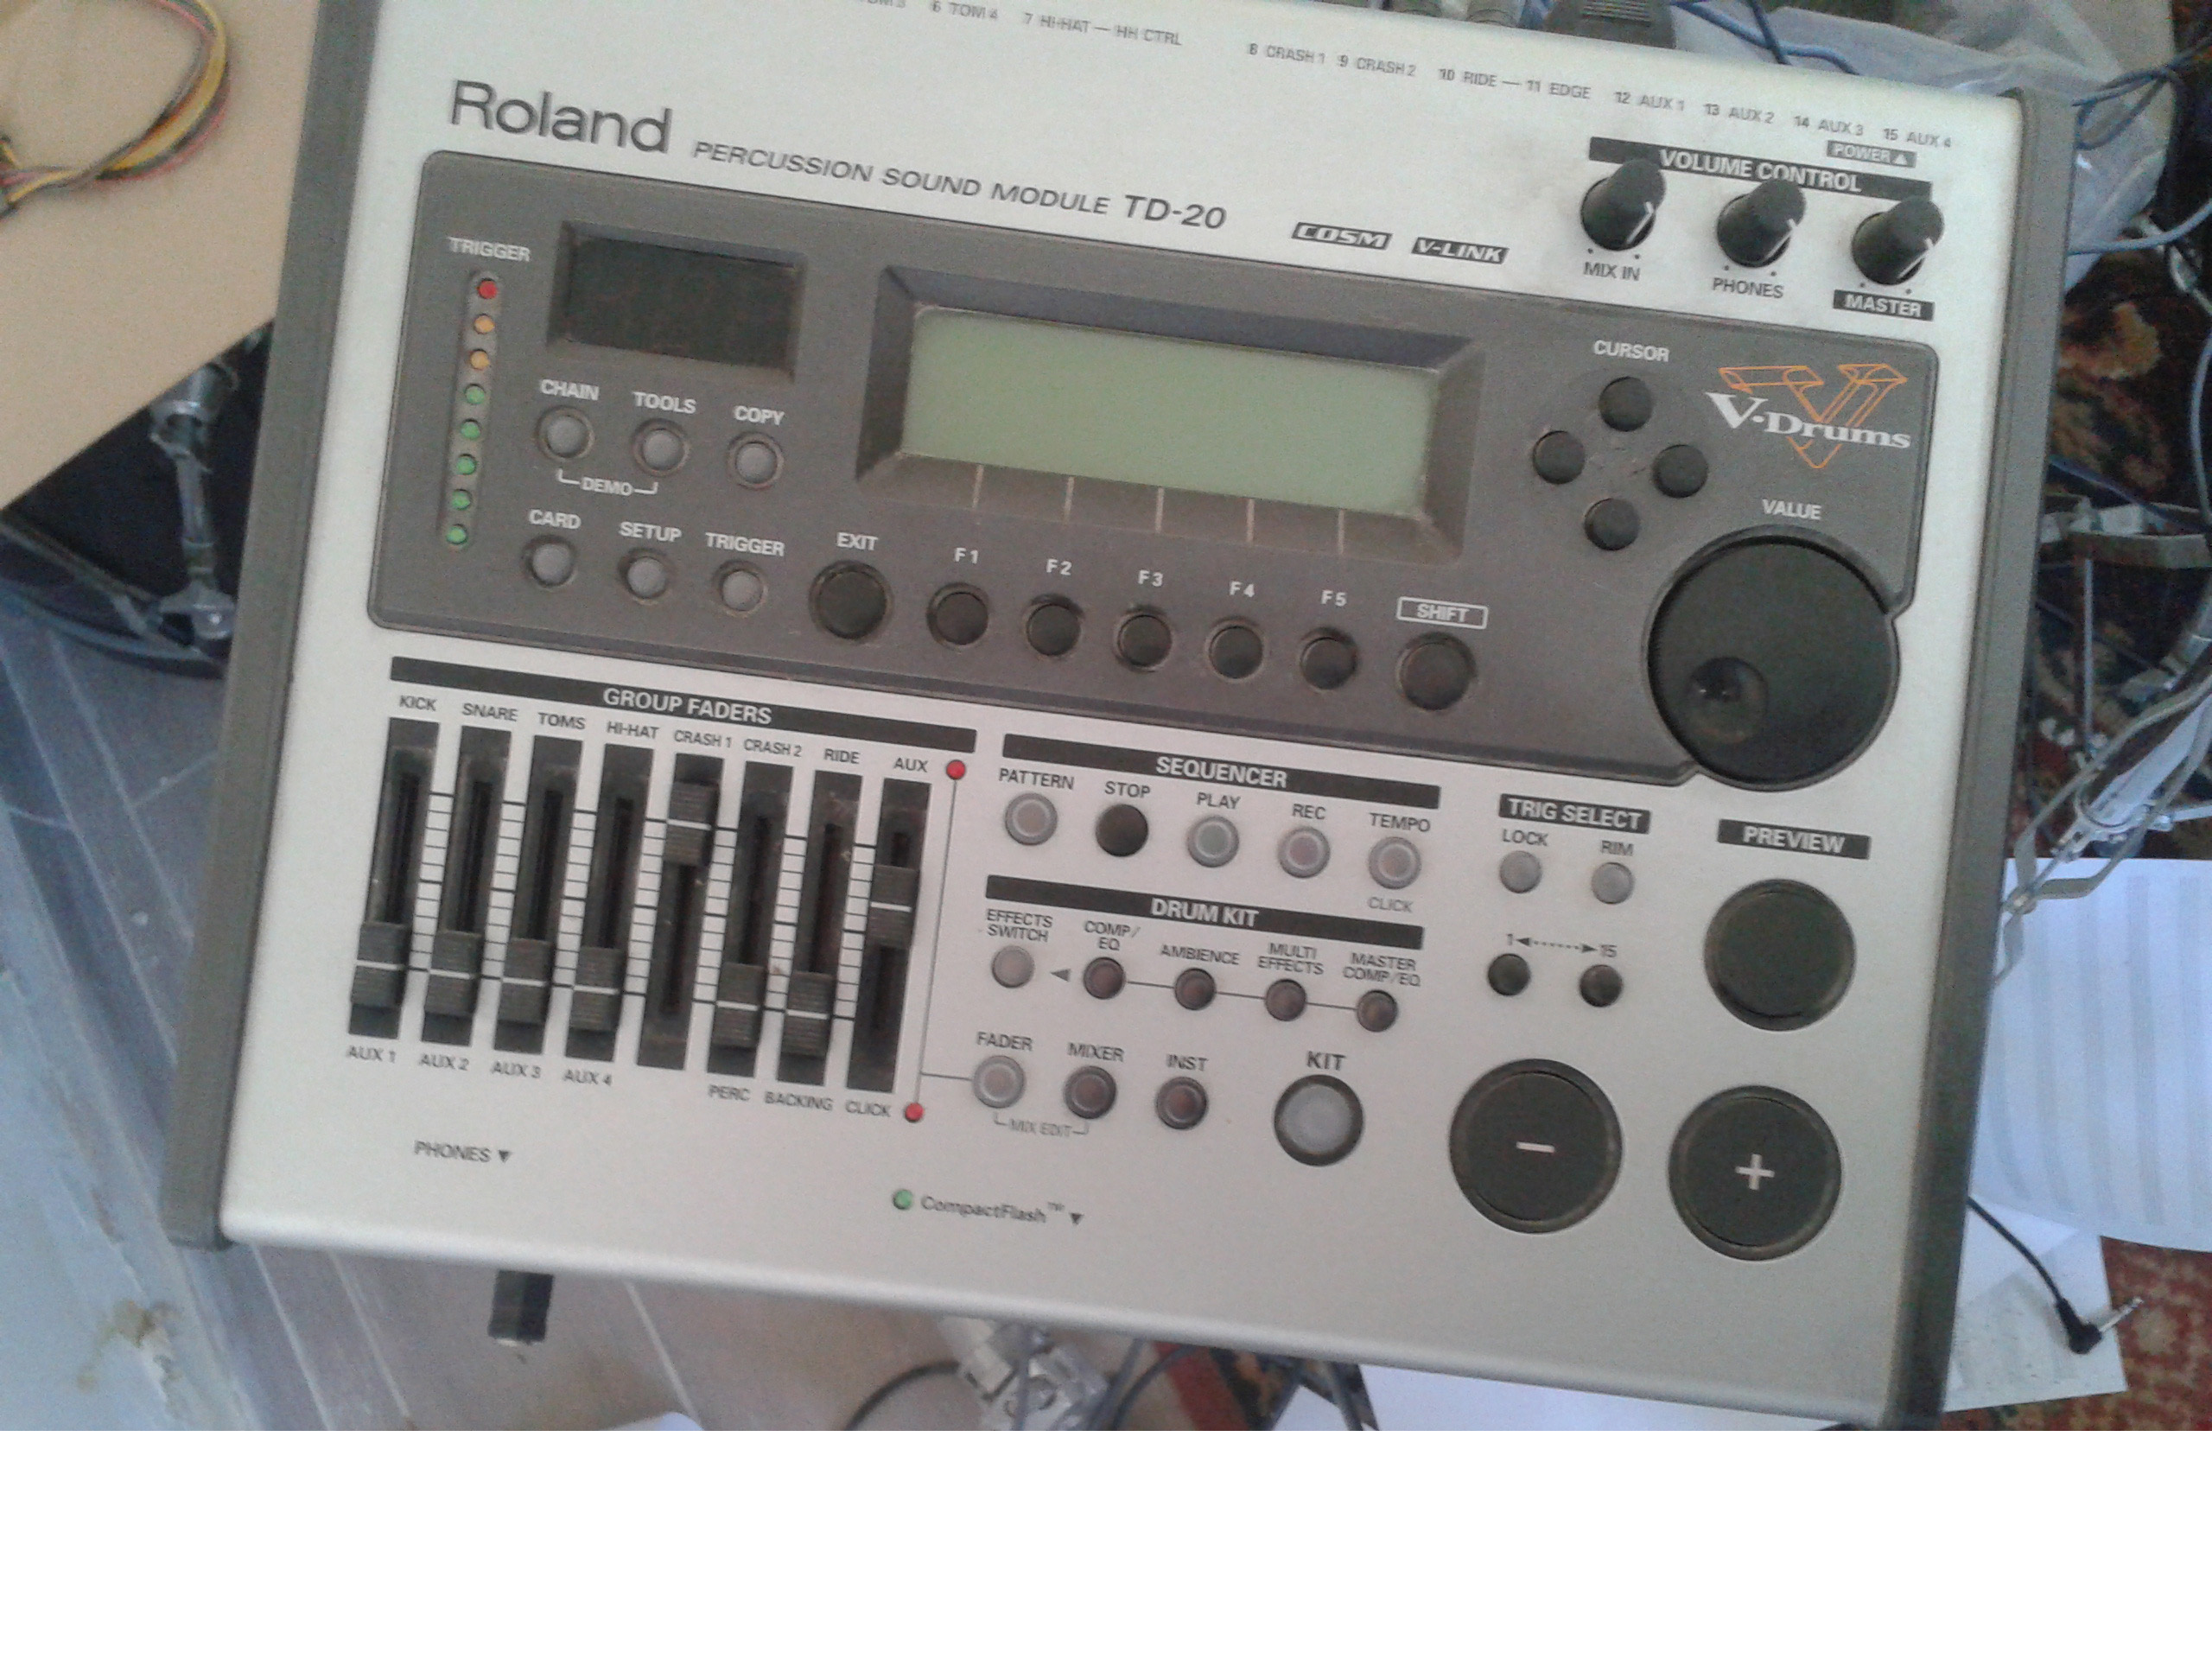 Roland TD-20 Module image (#460660) - Audiofanzine